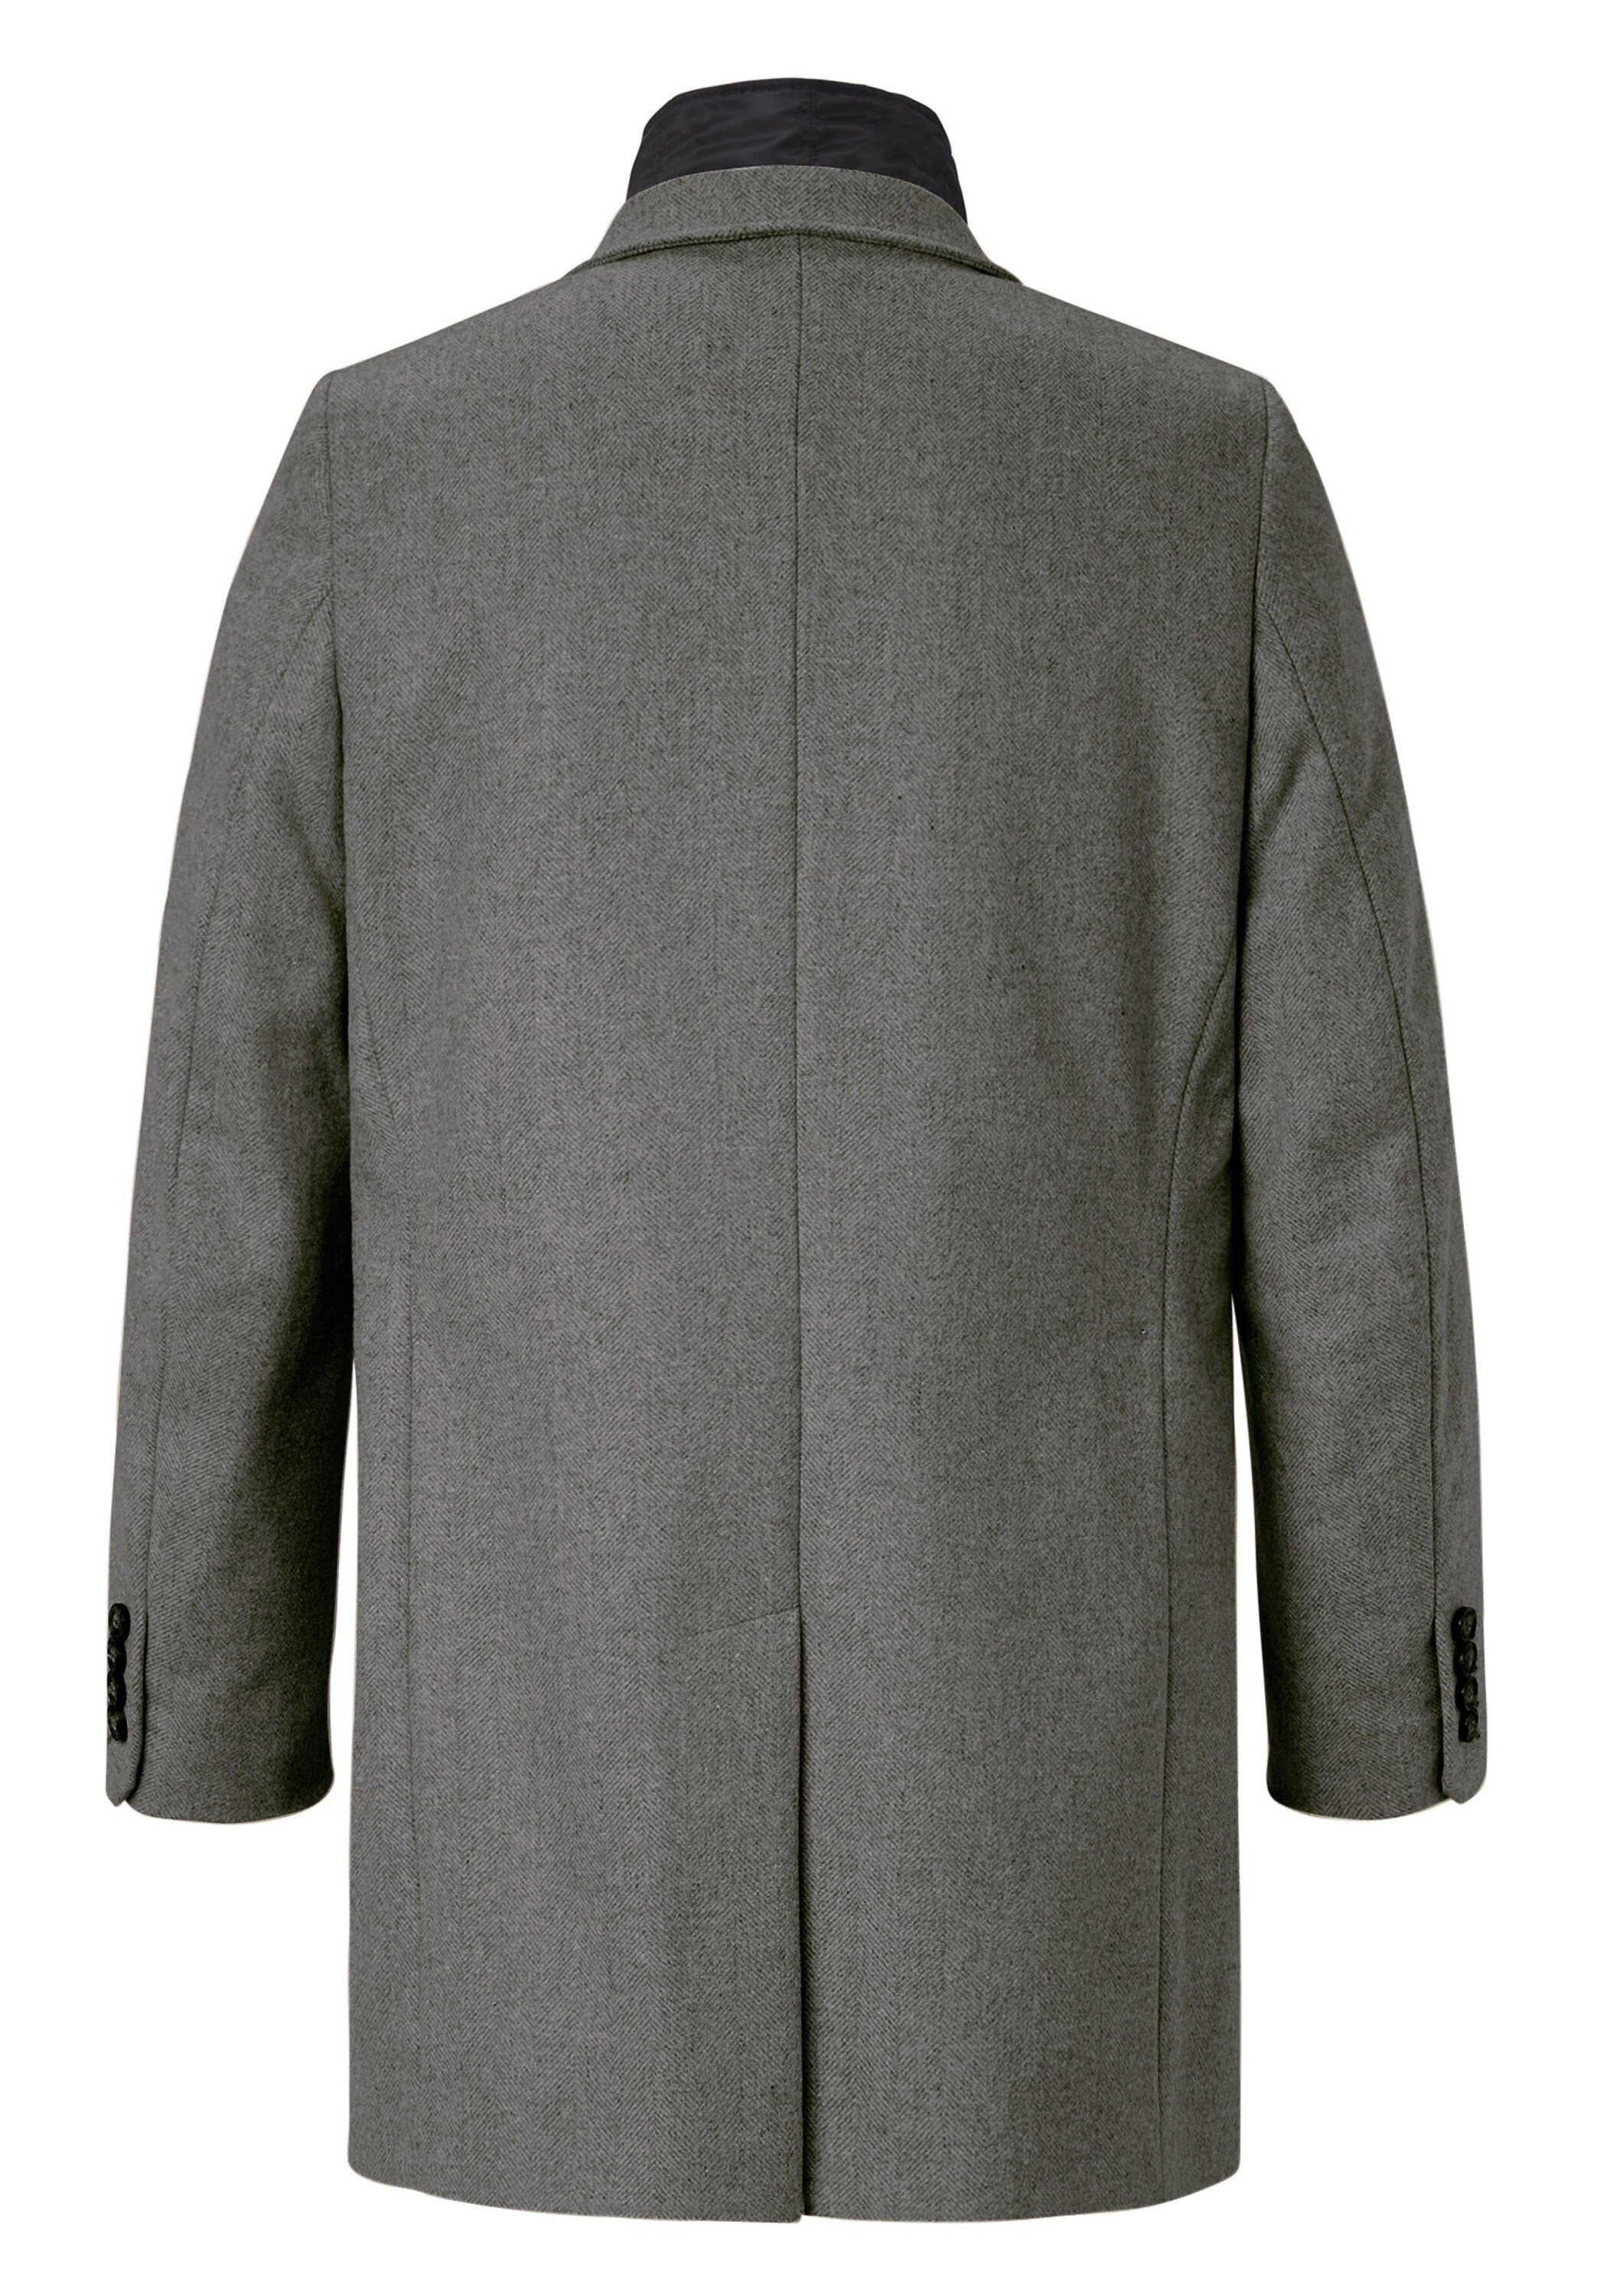 Newton Wollmantel grey/anthra Mantel L Jackets S4 moderner